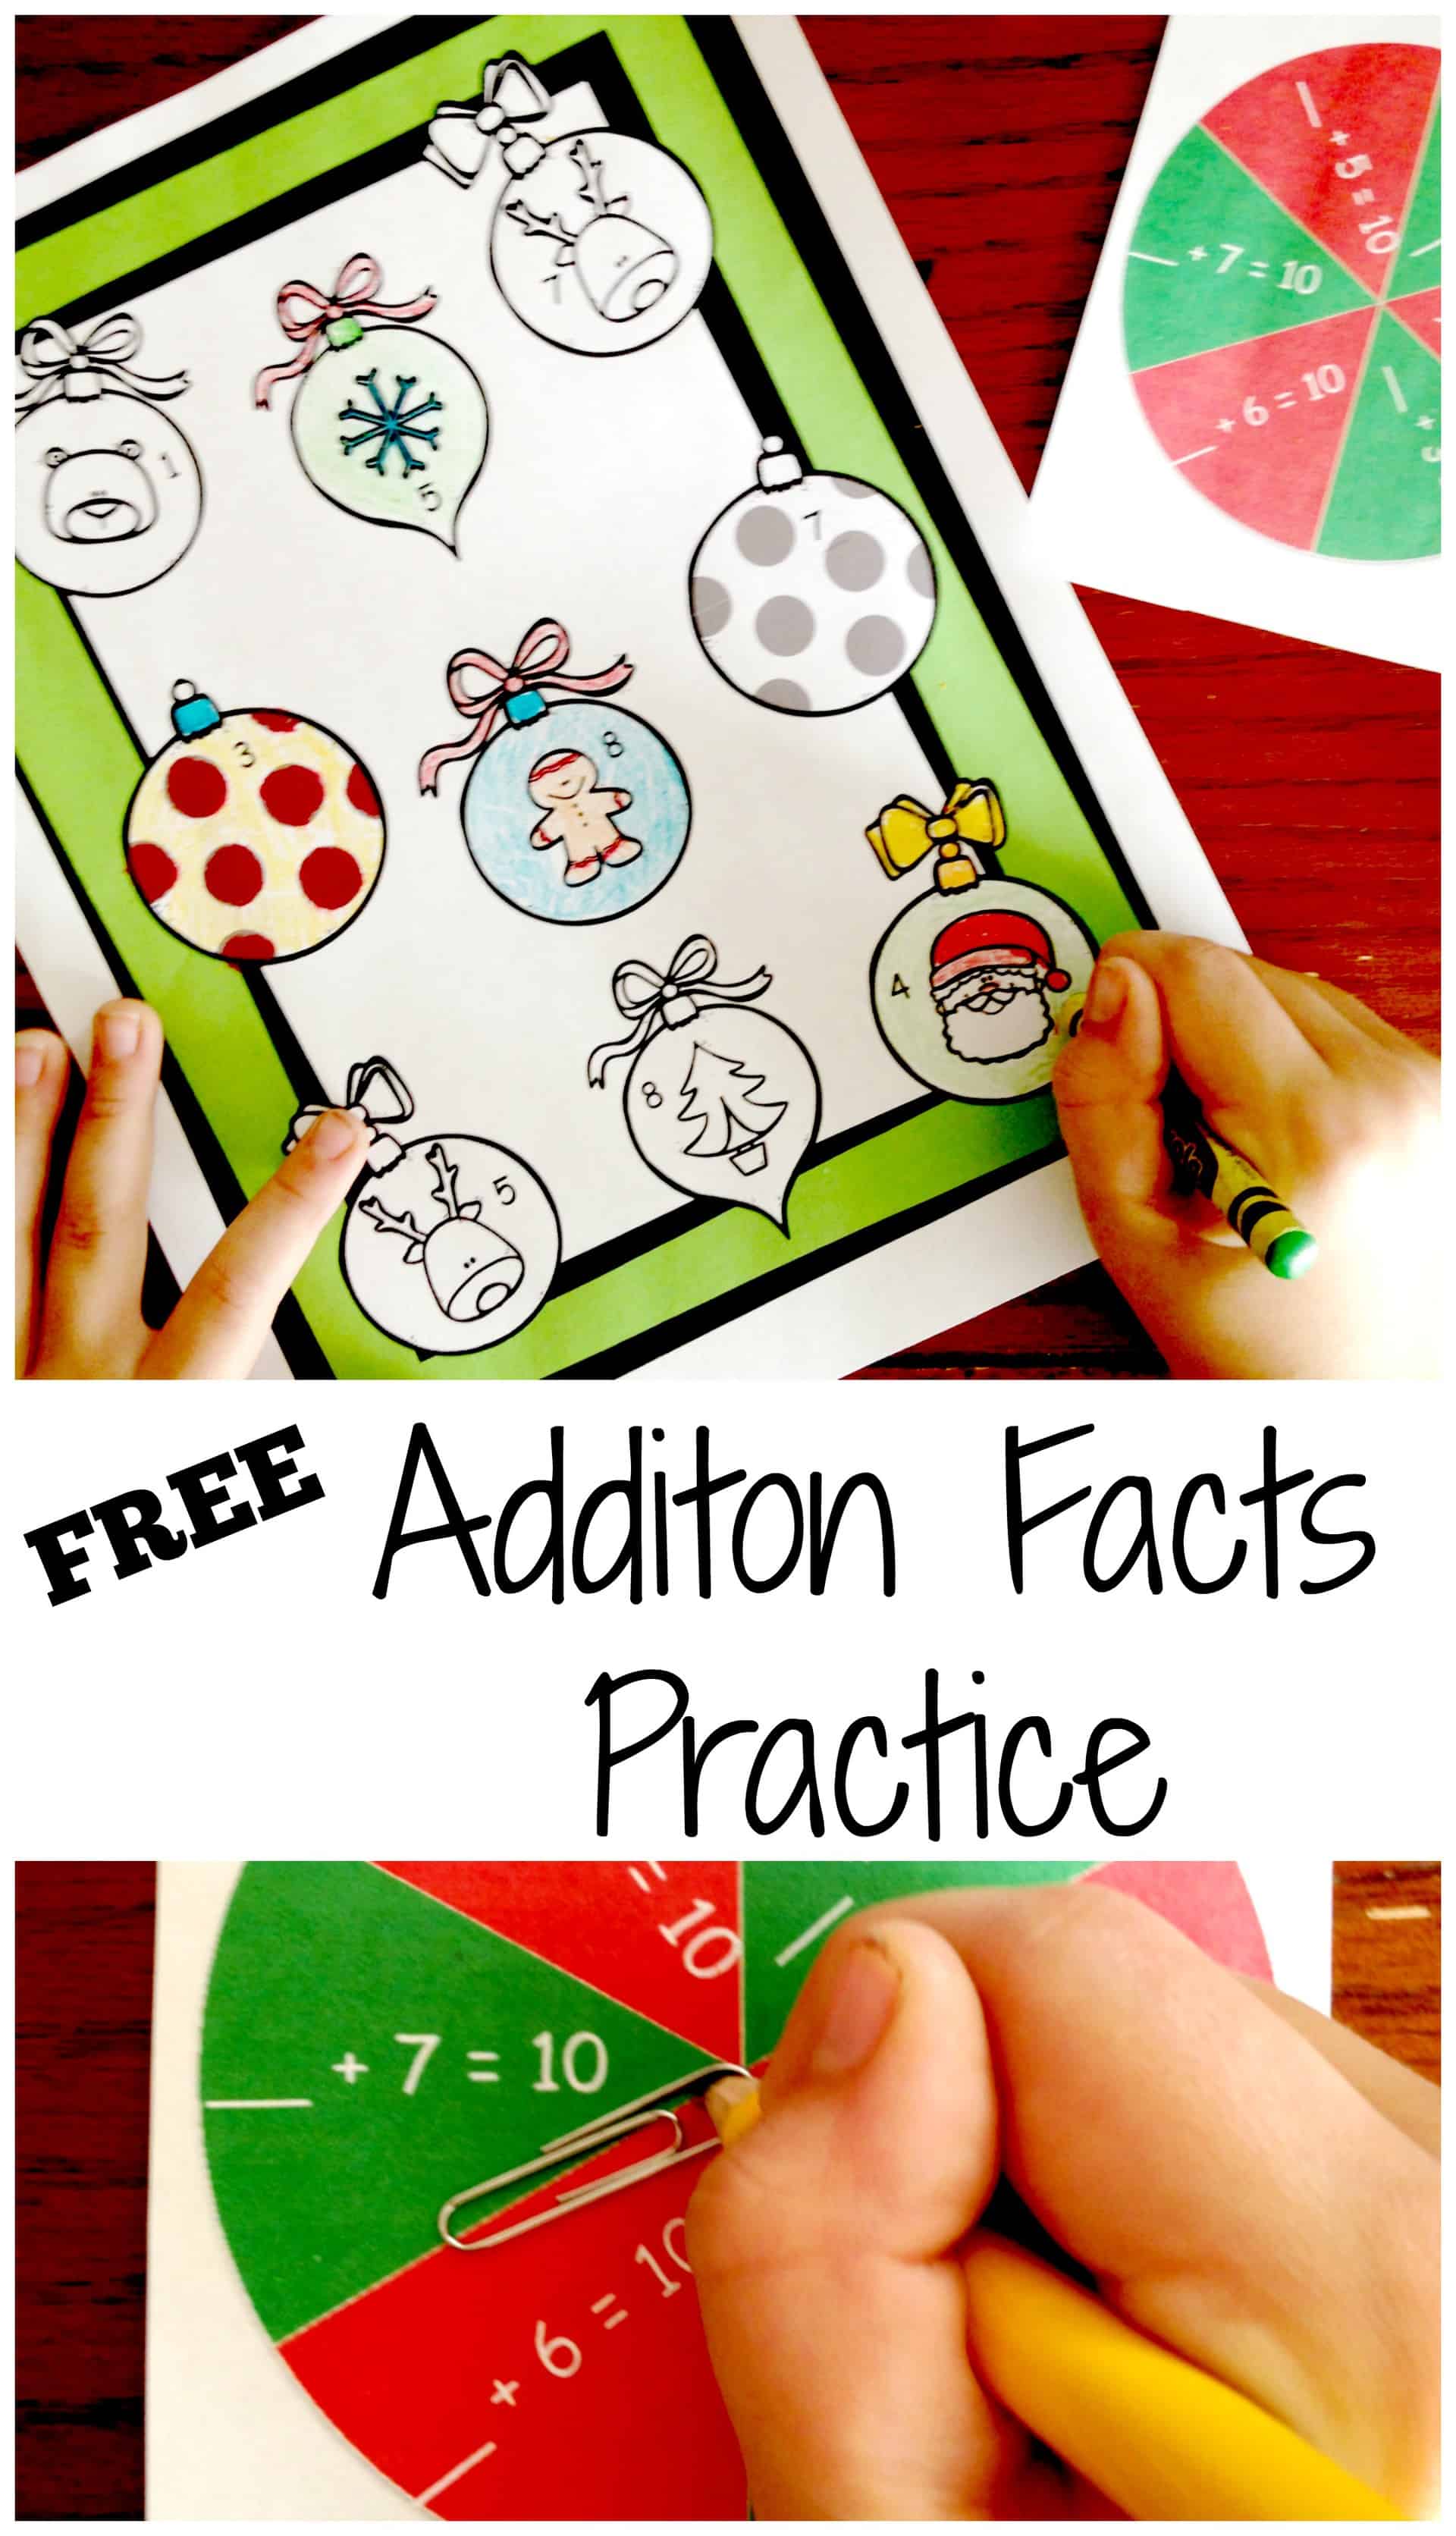 additon-facts-practice